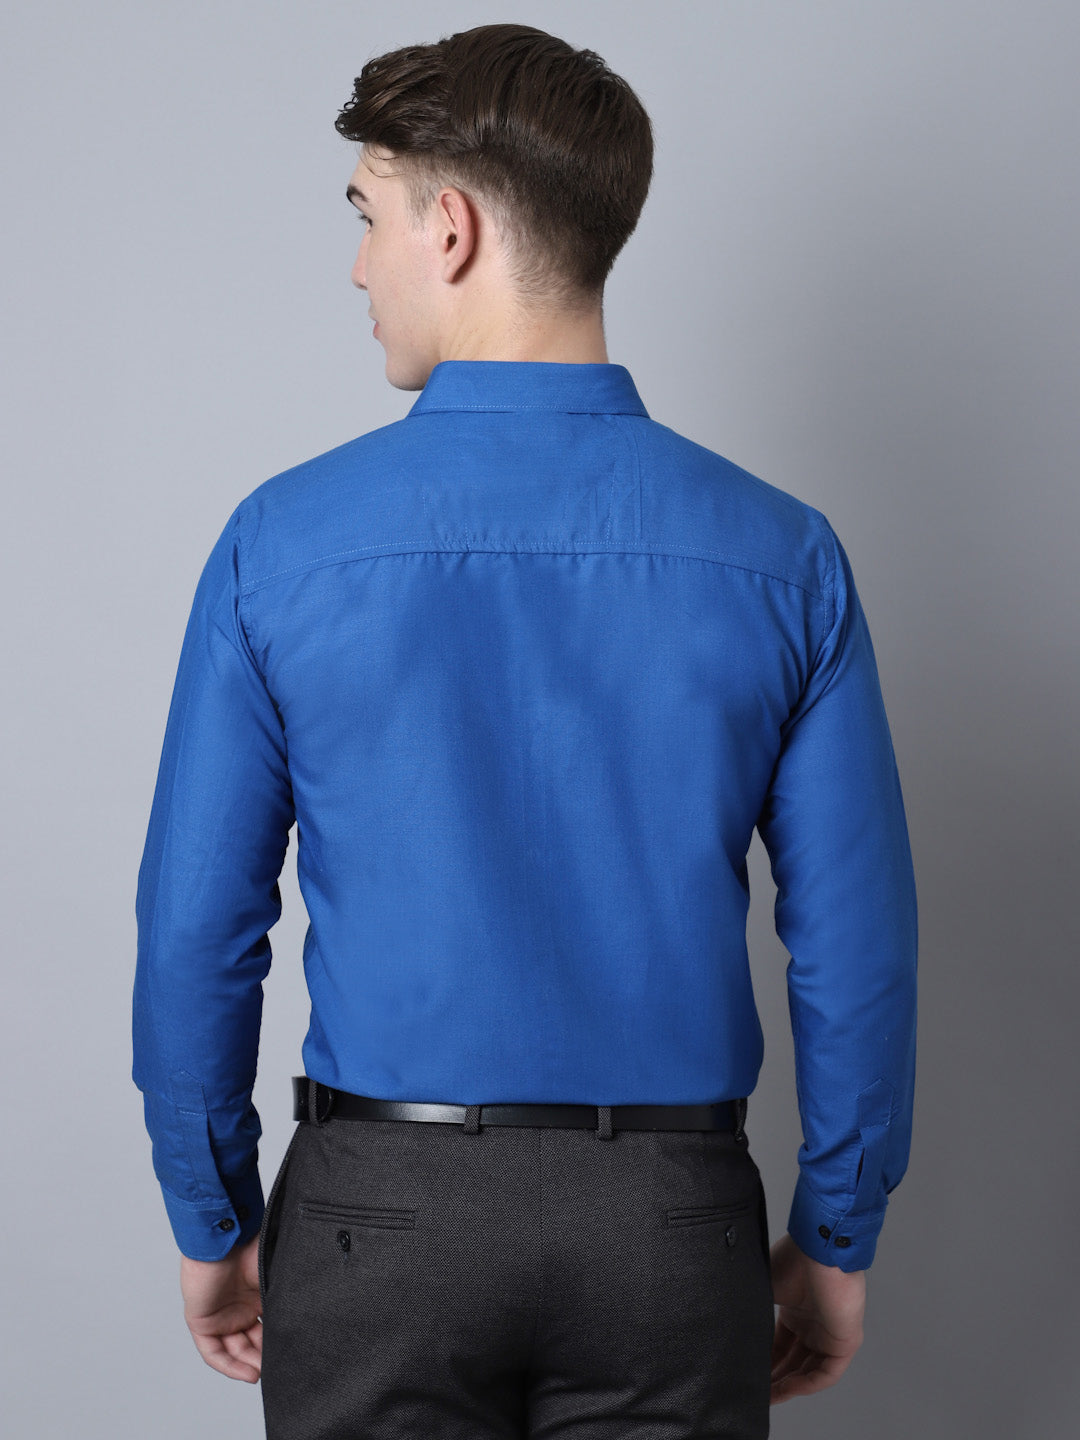 Majestic Man Versatile Solid Formal Shirt - Royal Blue